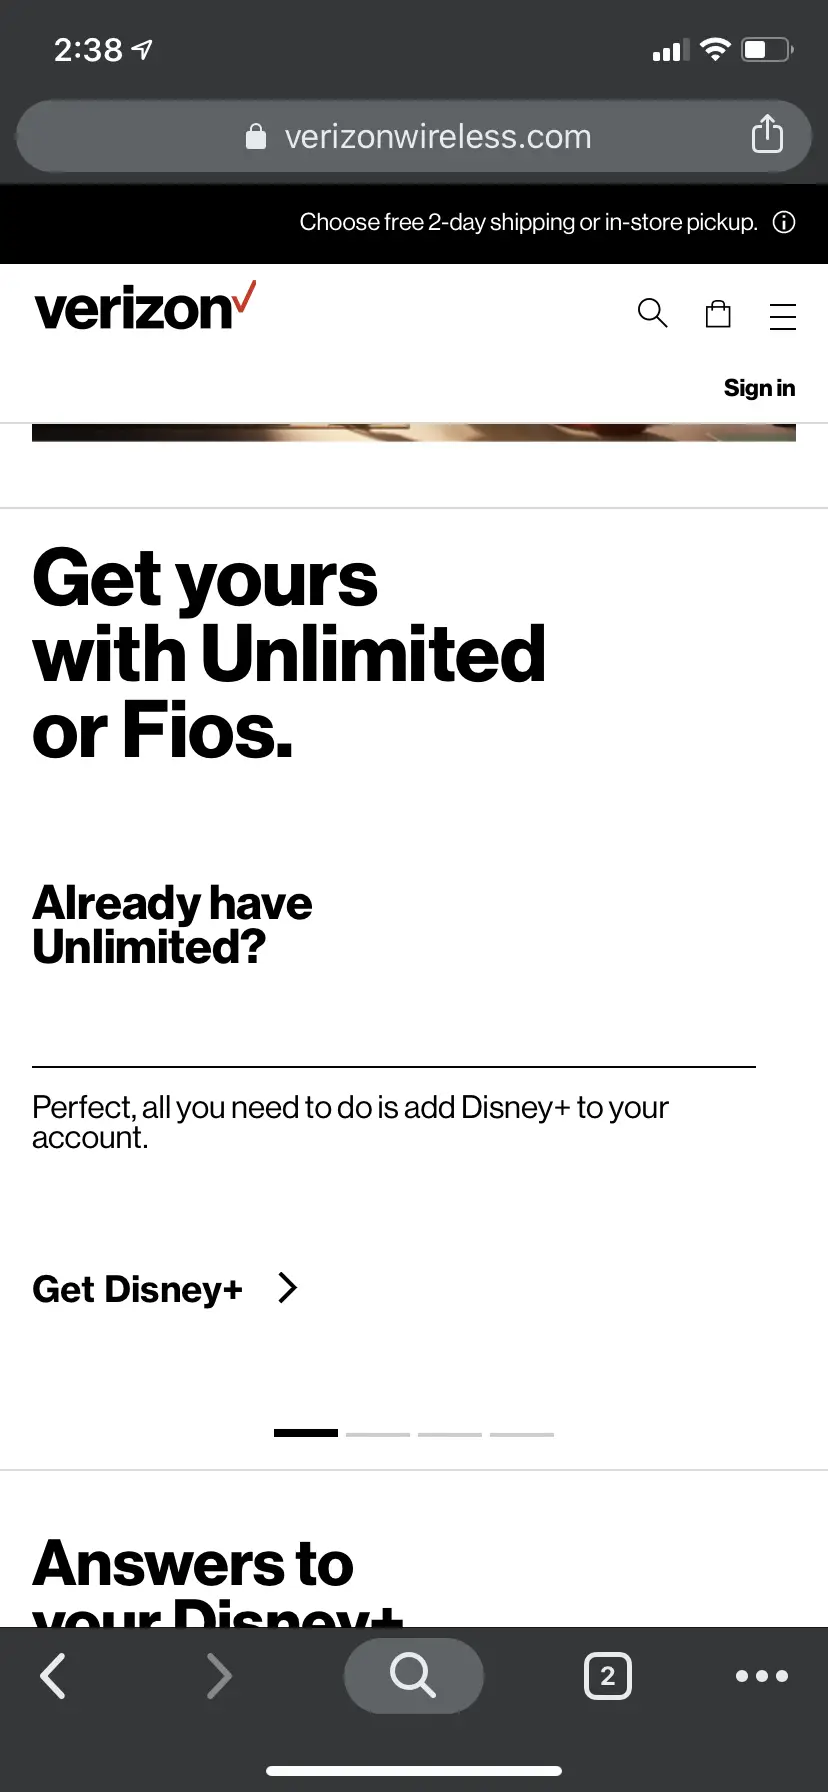 How To Get Disney Plus Free With Verizon